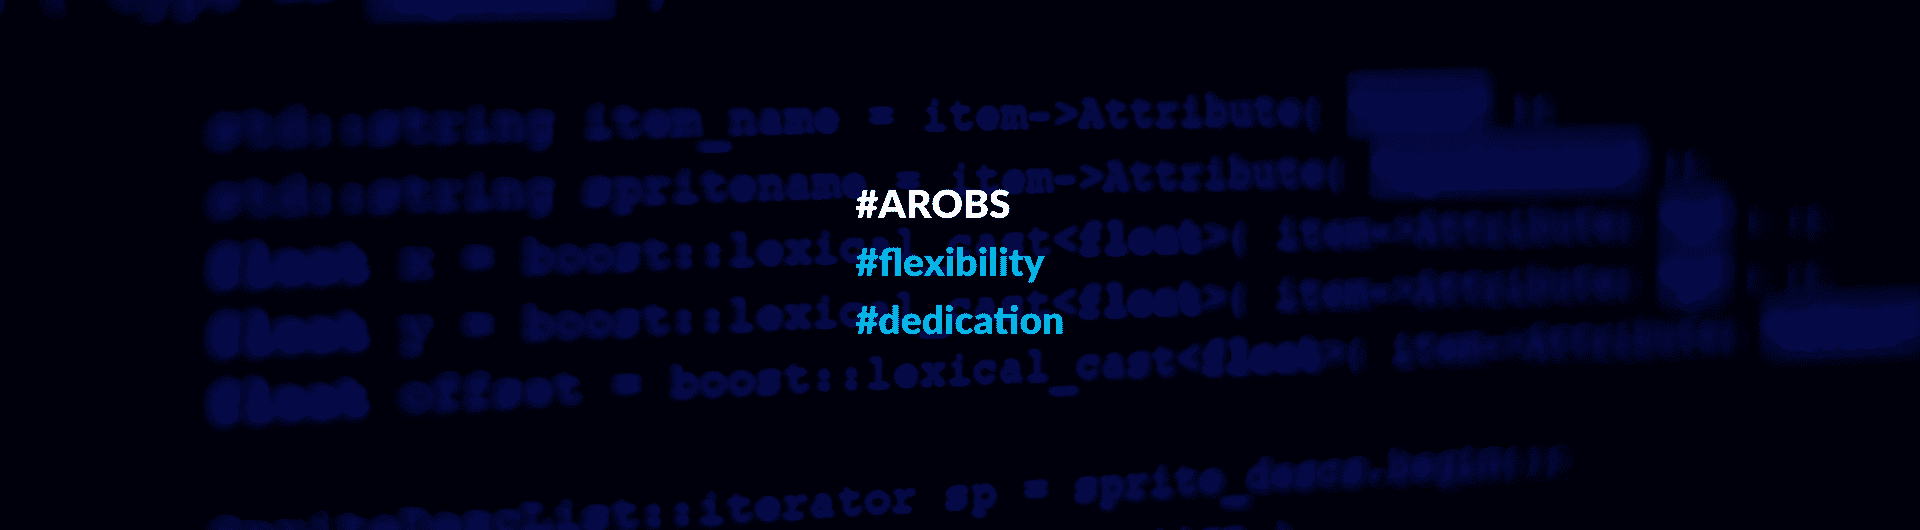 arobs.com_testimoniale_enterprise_solutions_1920x530px